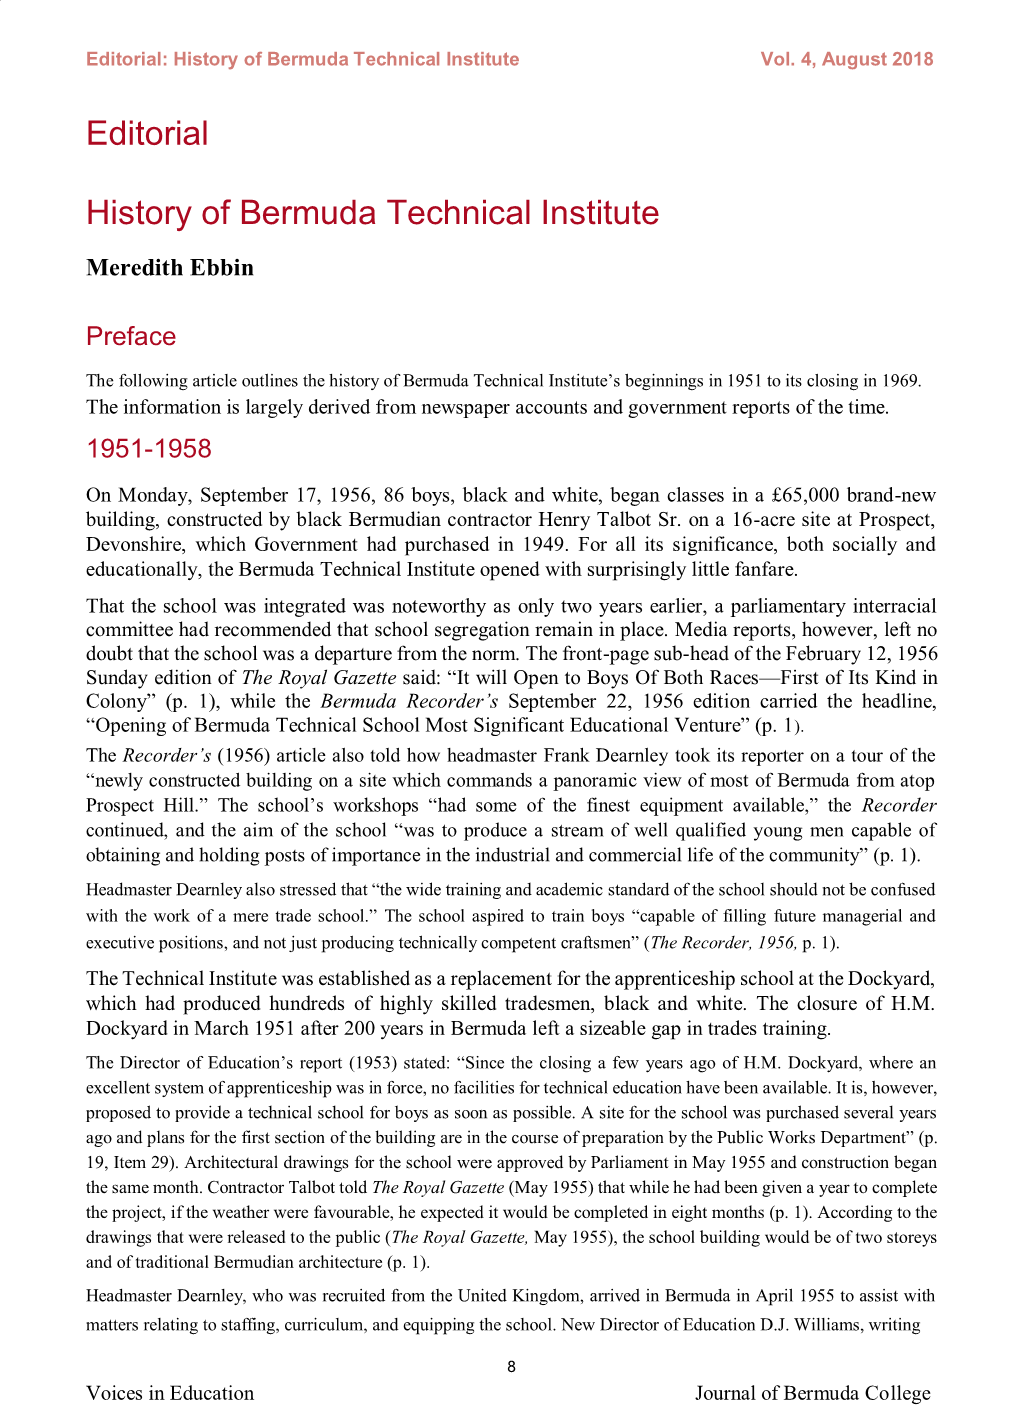 History of Bermuda Technical Institute Vol